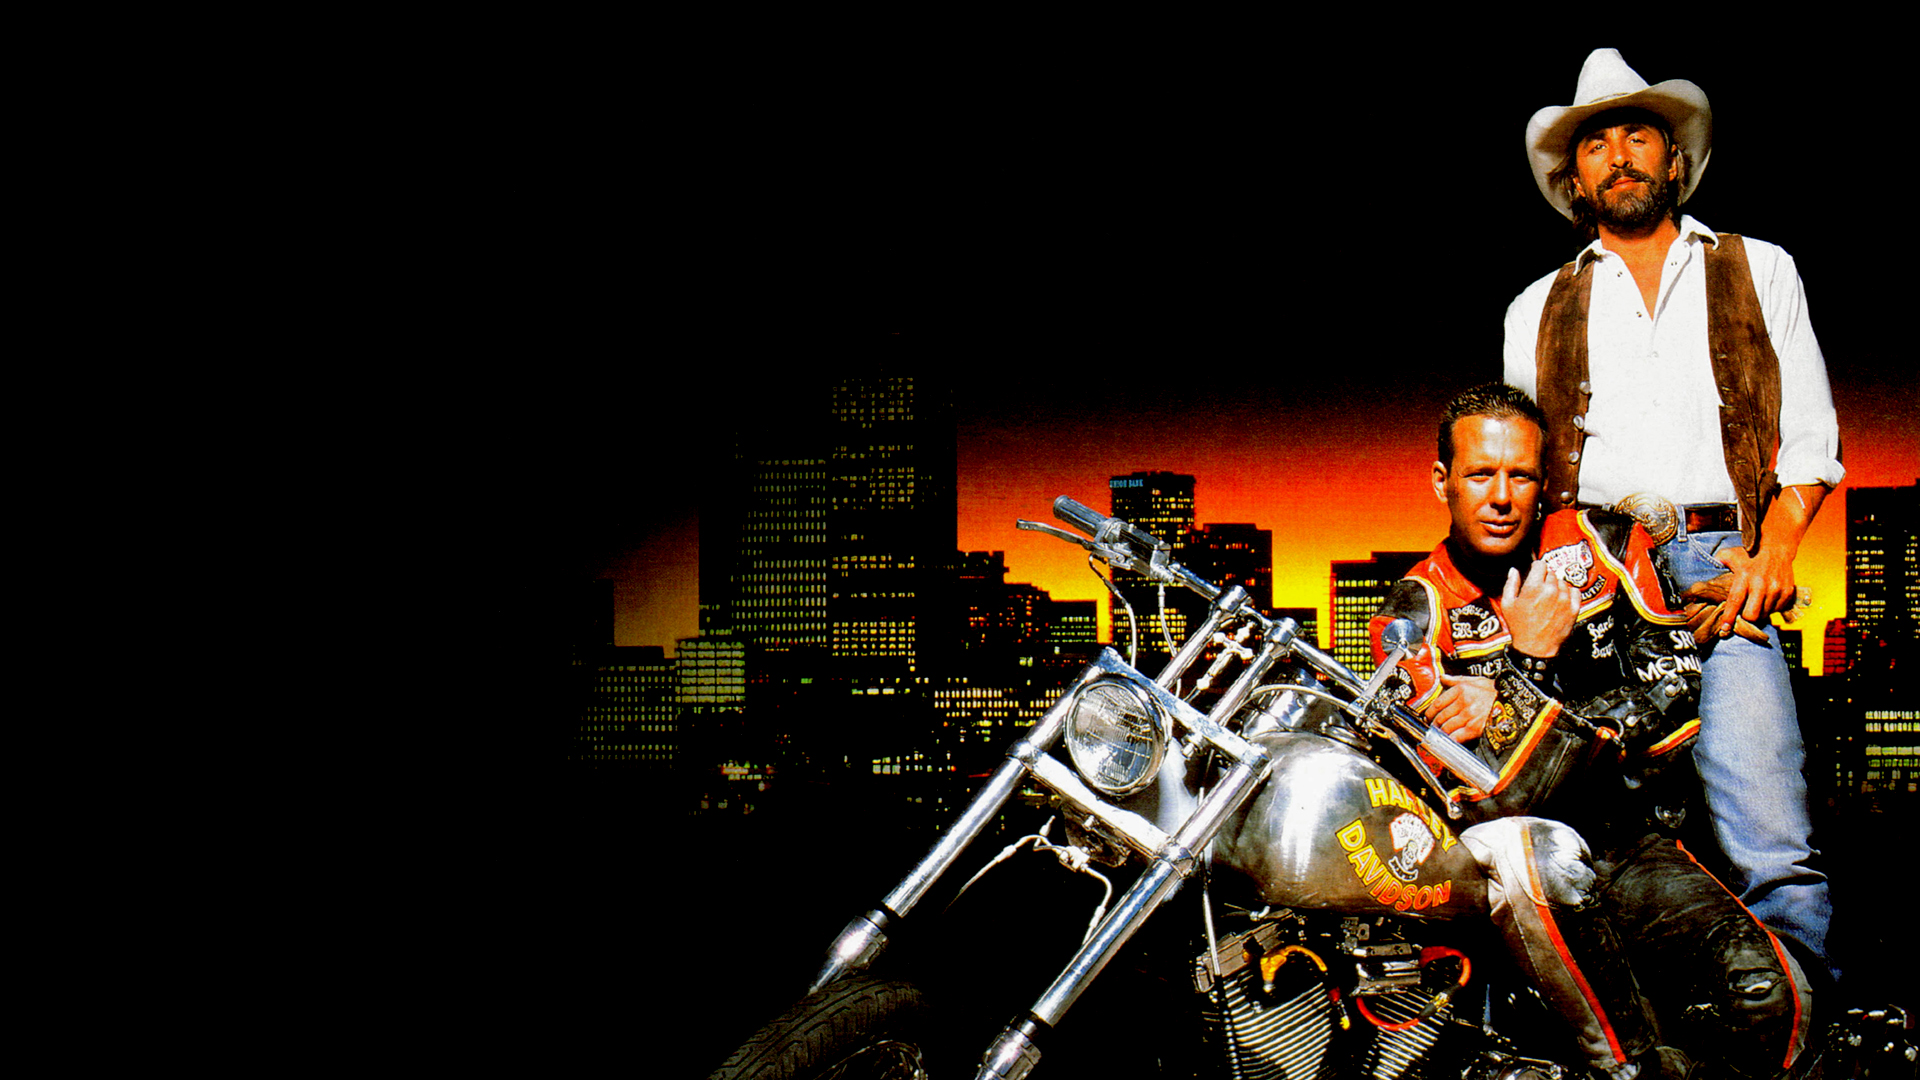 Harley Davidson And The Marlboro Man Hd Wallpaper Background Image 1920x1080